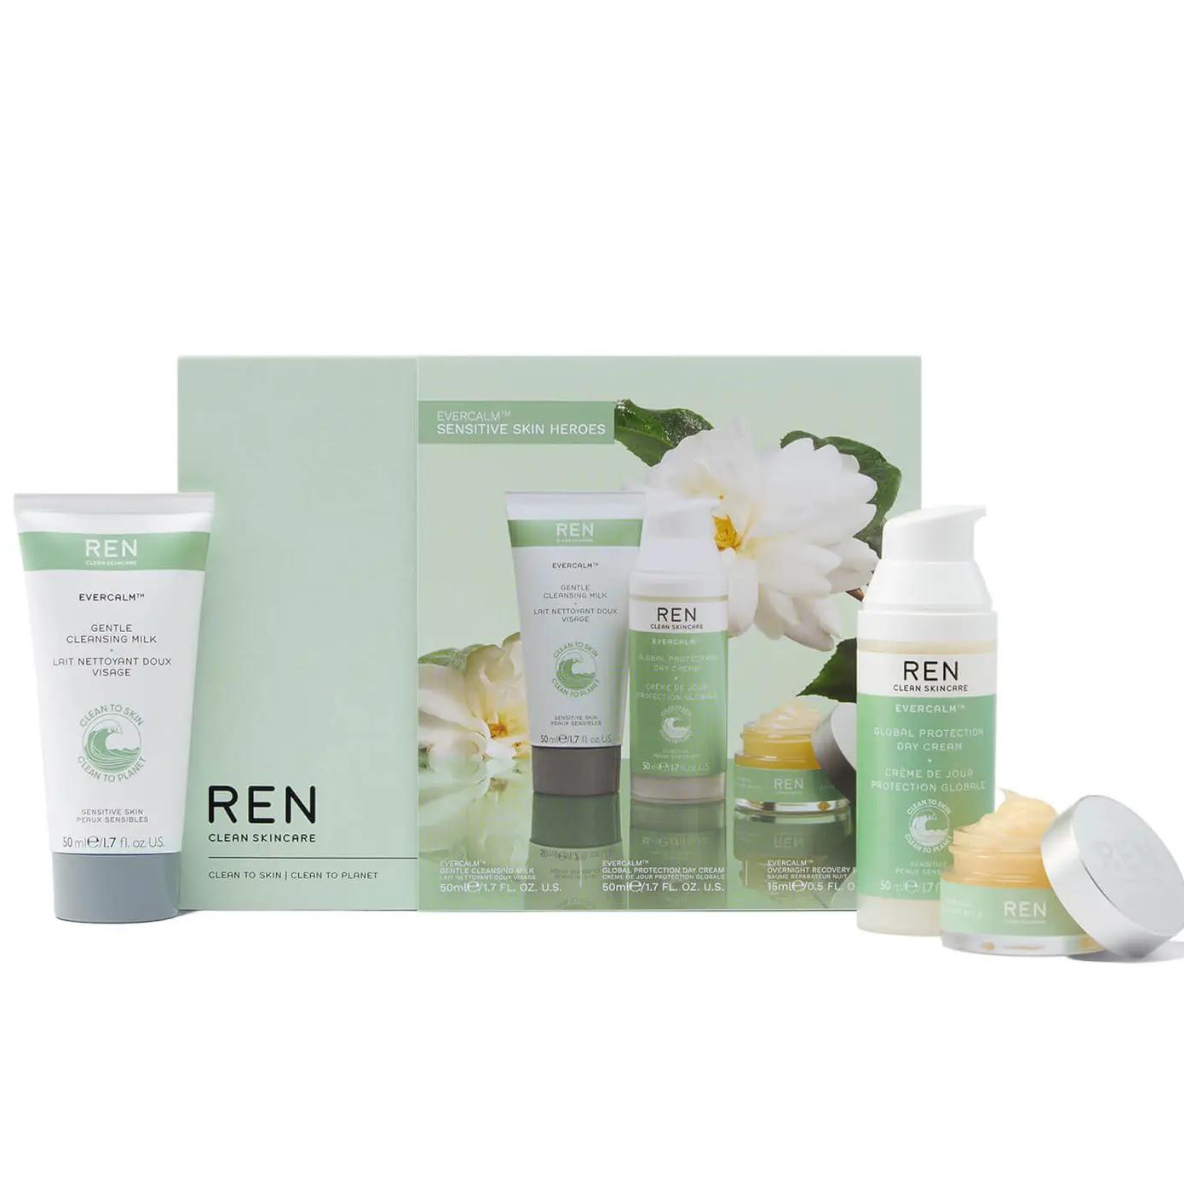 REN Evercalm Sensitive Skin Heros Gift Set SAVE 35%